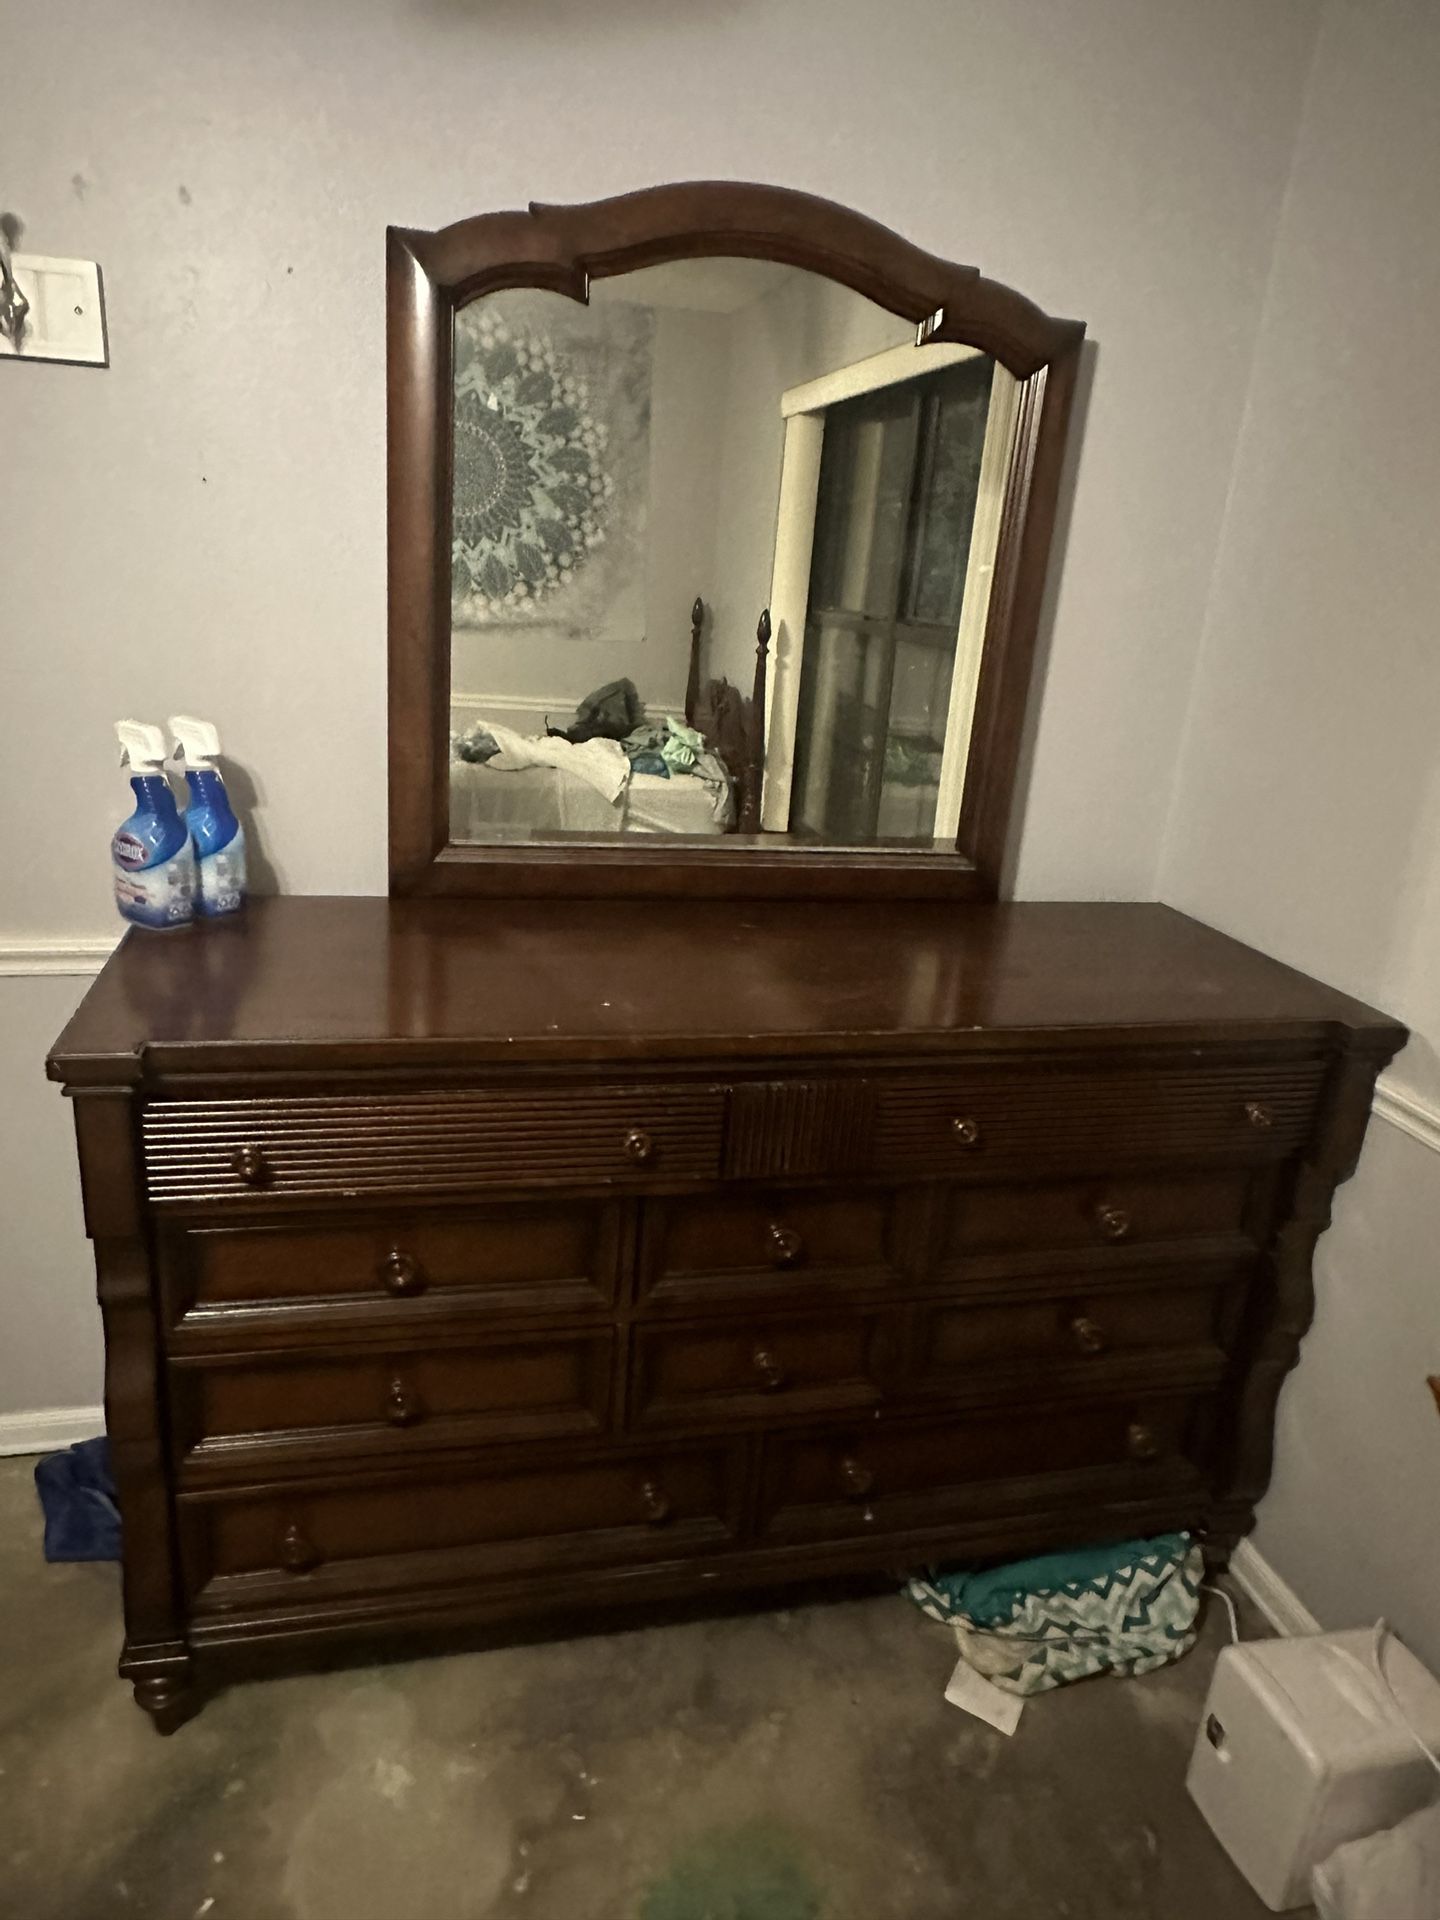 Aspen Home Mirrored Dresser 